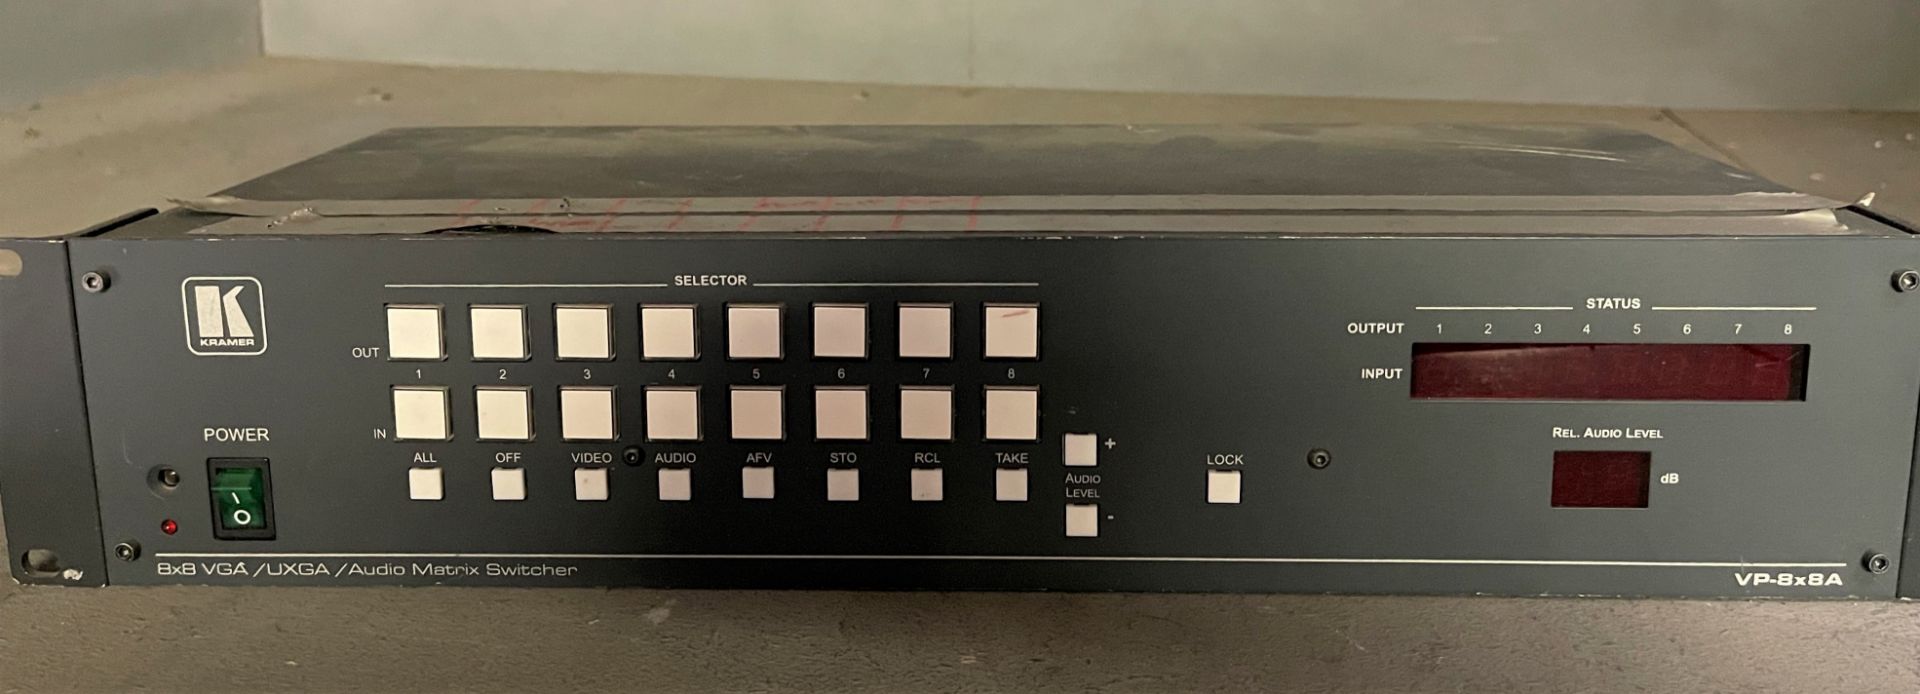 A Kramer VP-8x8A 8x8VGA/UXGA Audio Matrix Switcher, good condition, not tested